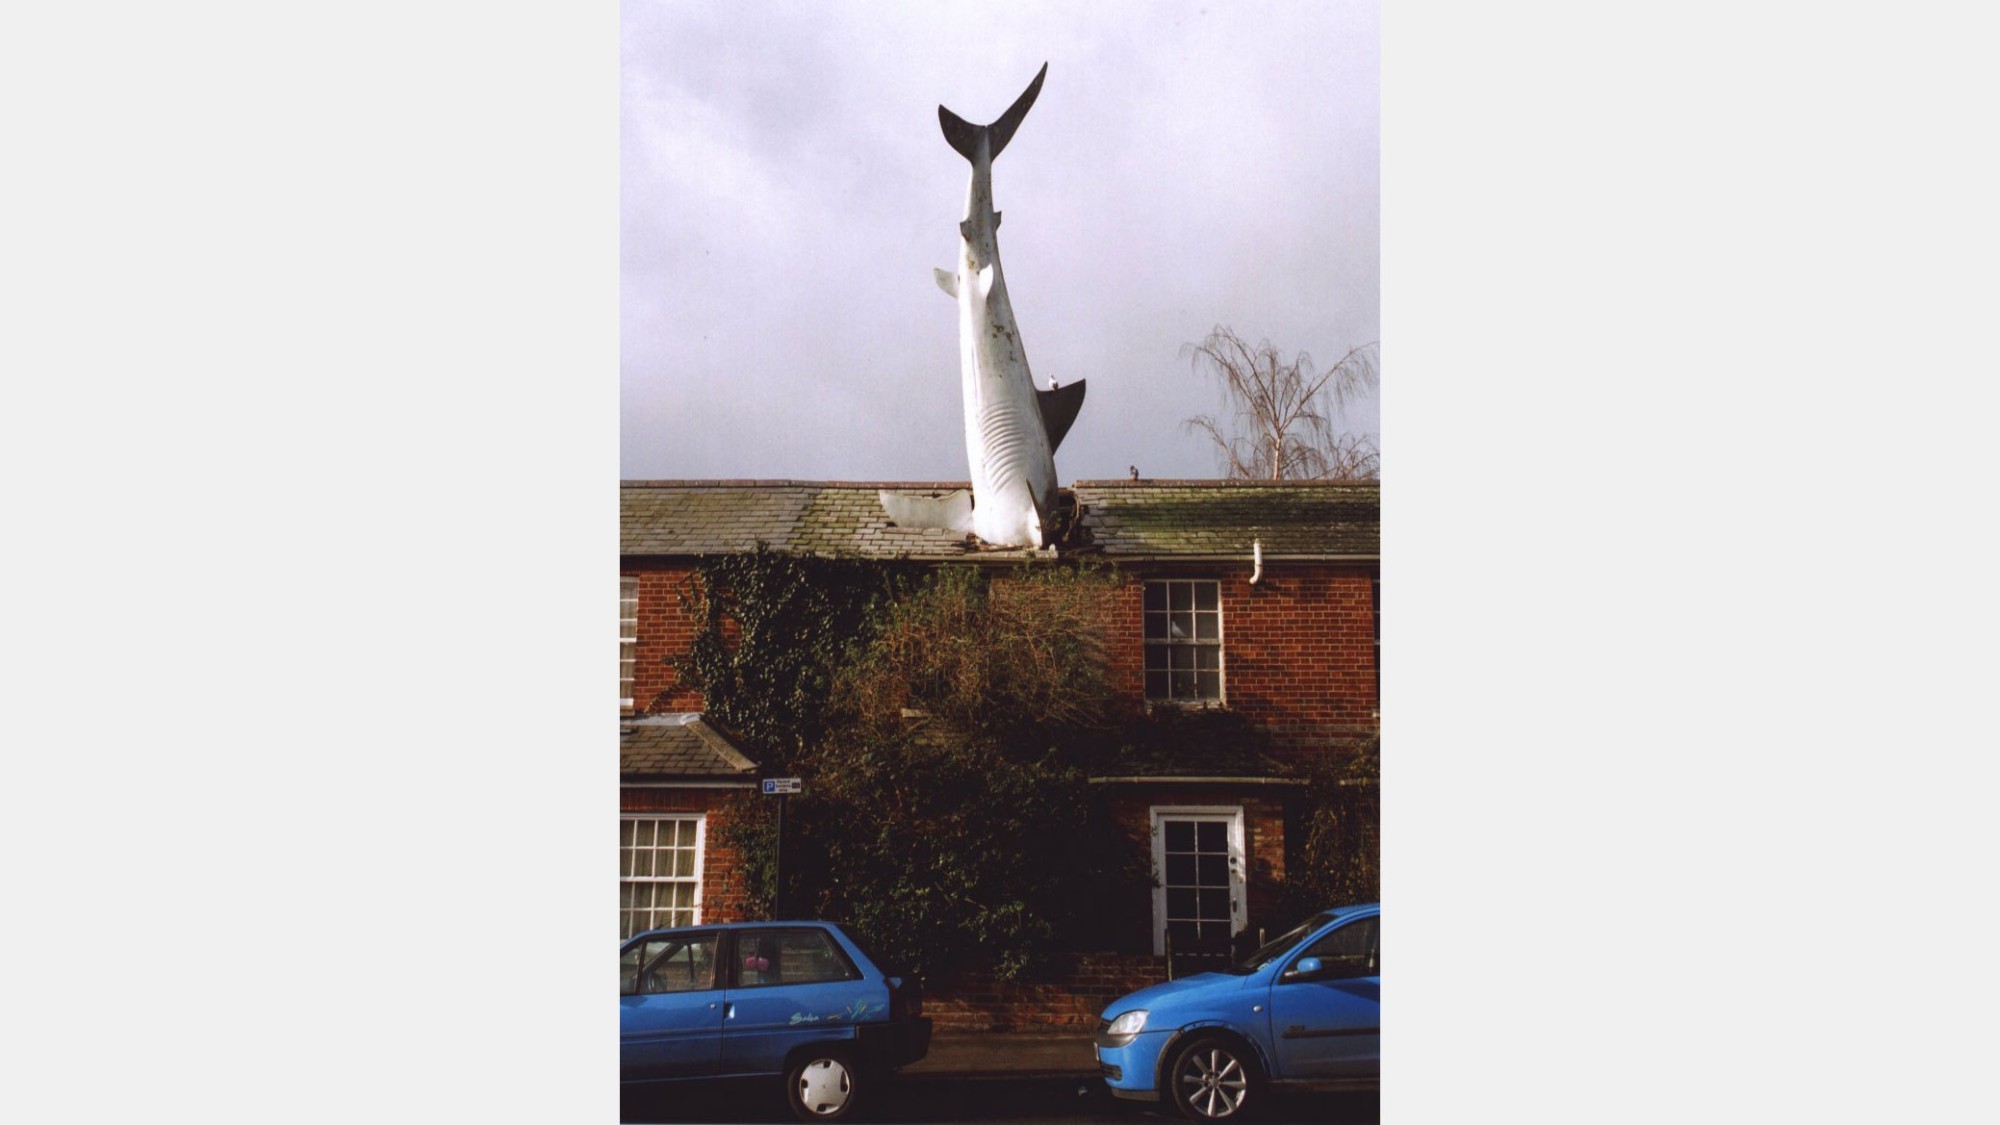 Headington Shark